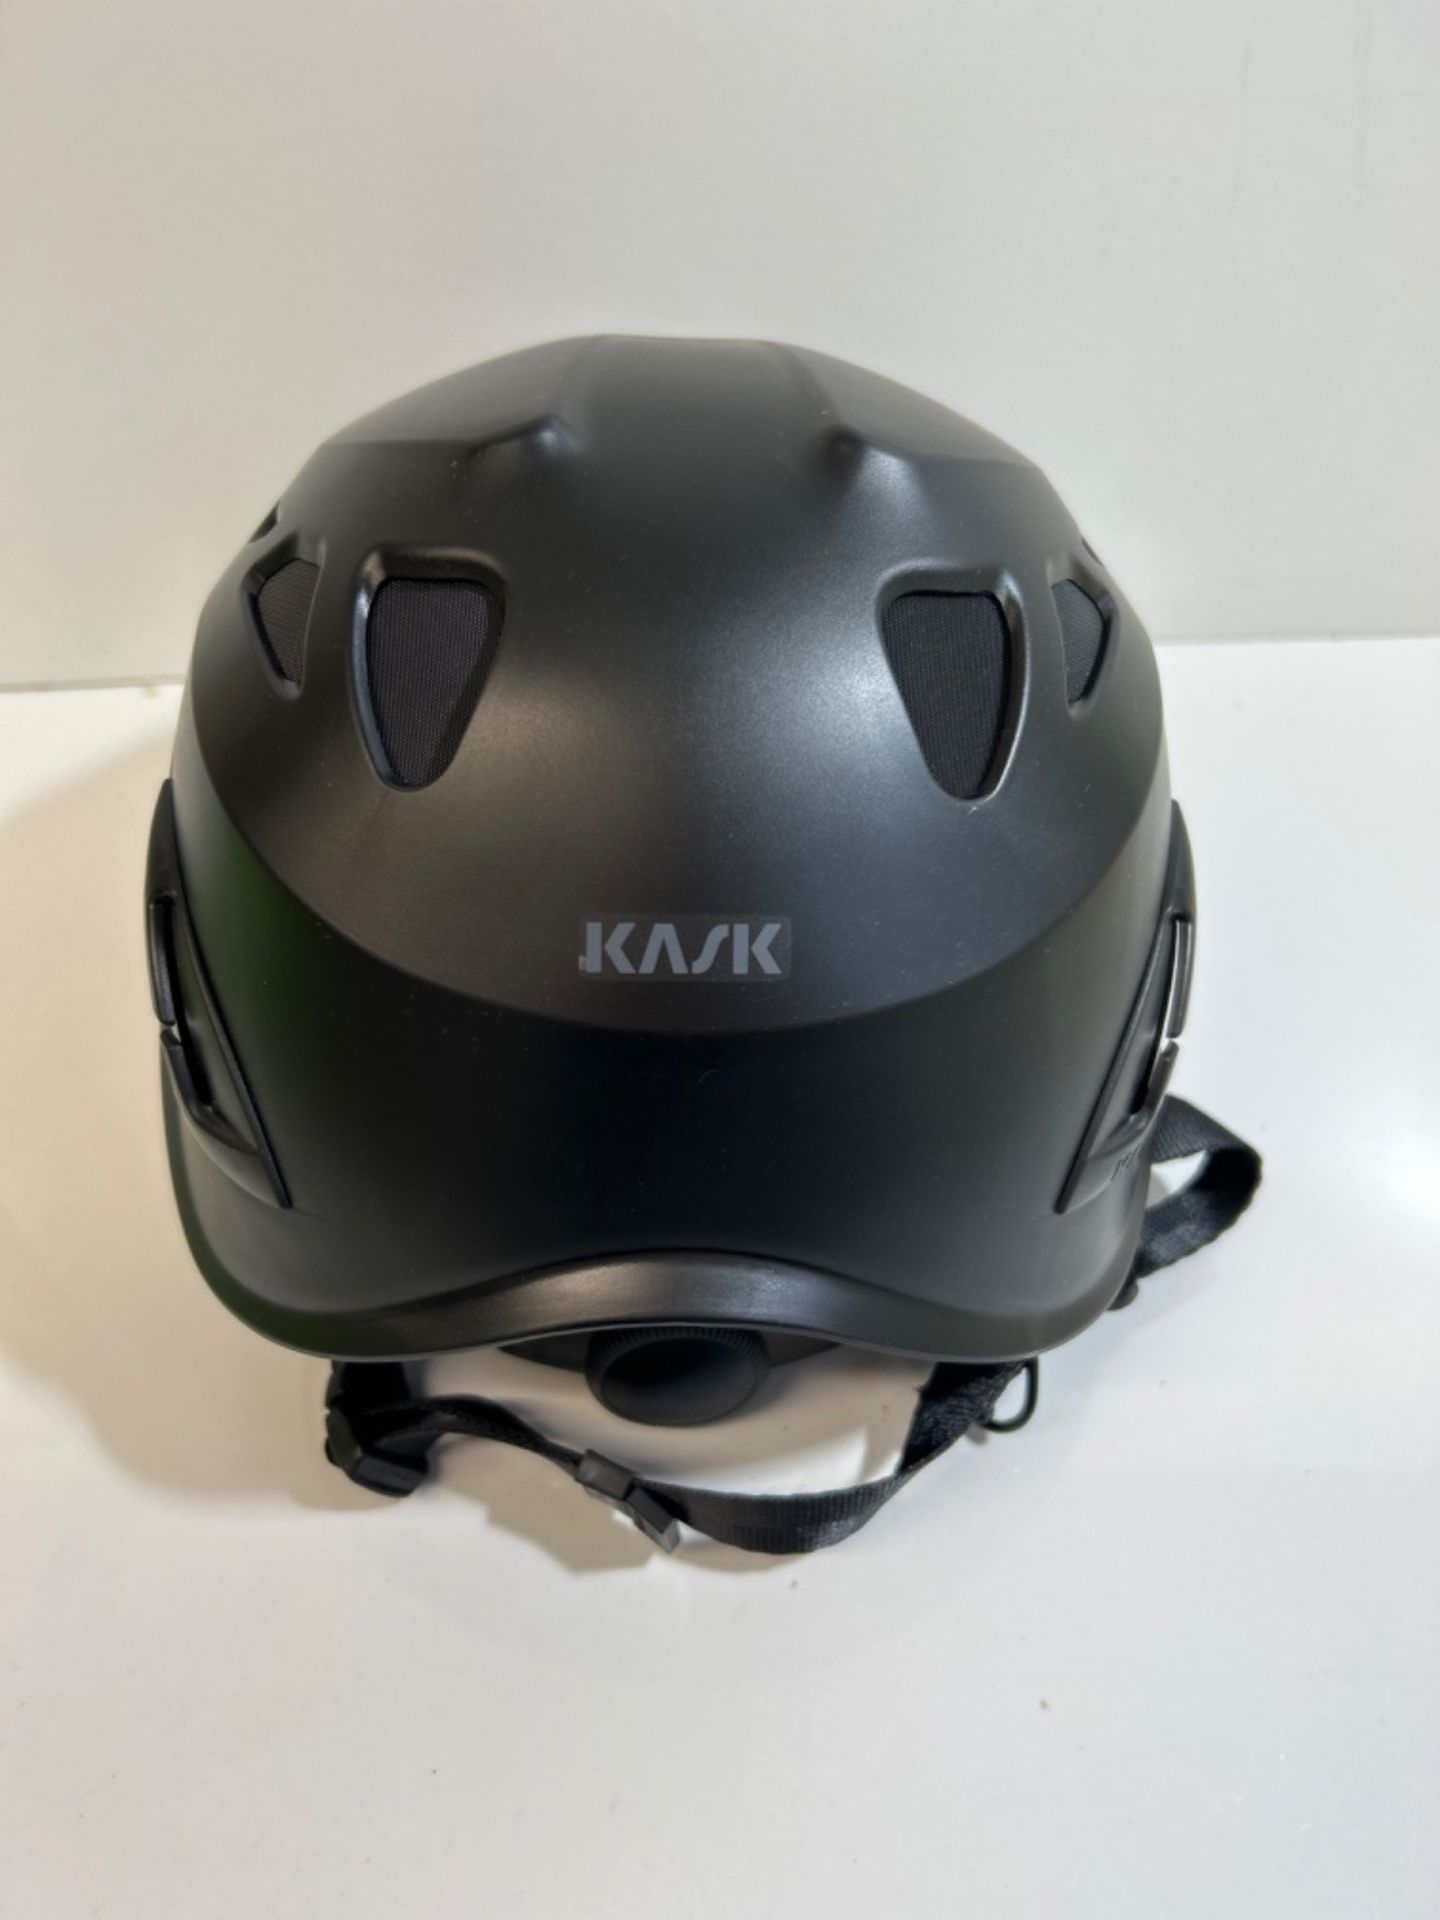 Kask WHE00008-210 Size 51-63 cm "Plasma Aq" Helmet - Black - Image 2 of 3